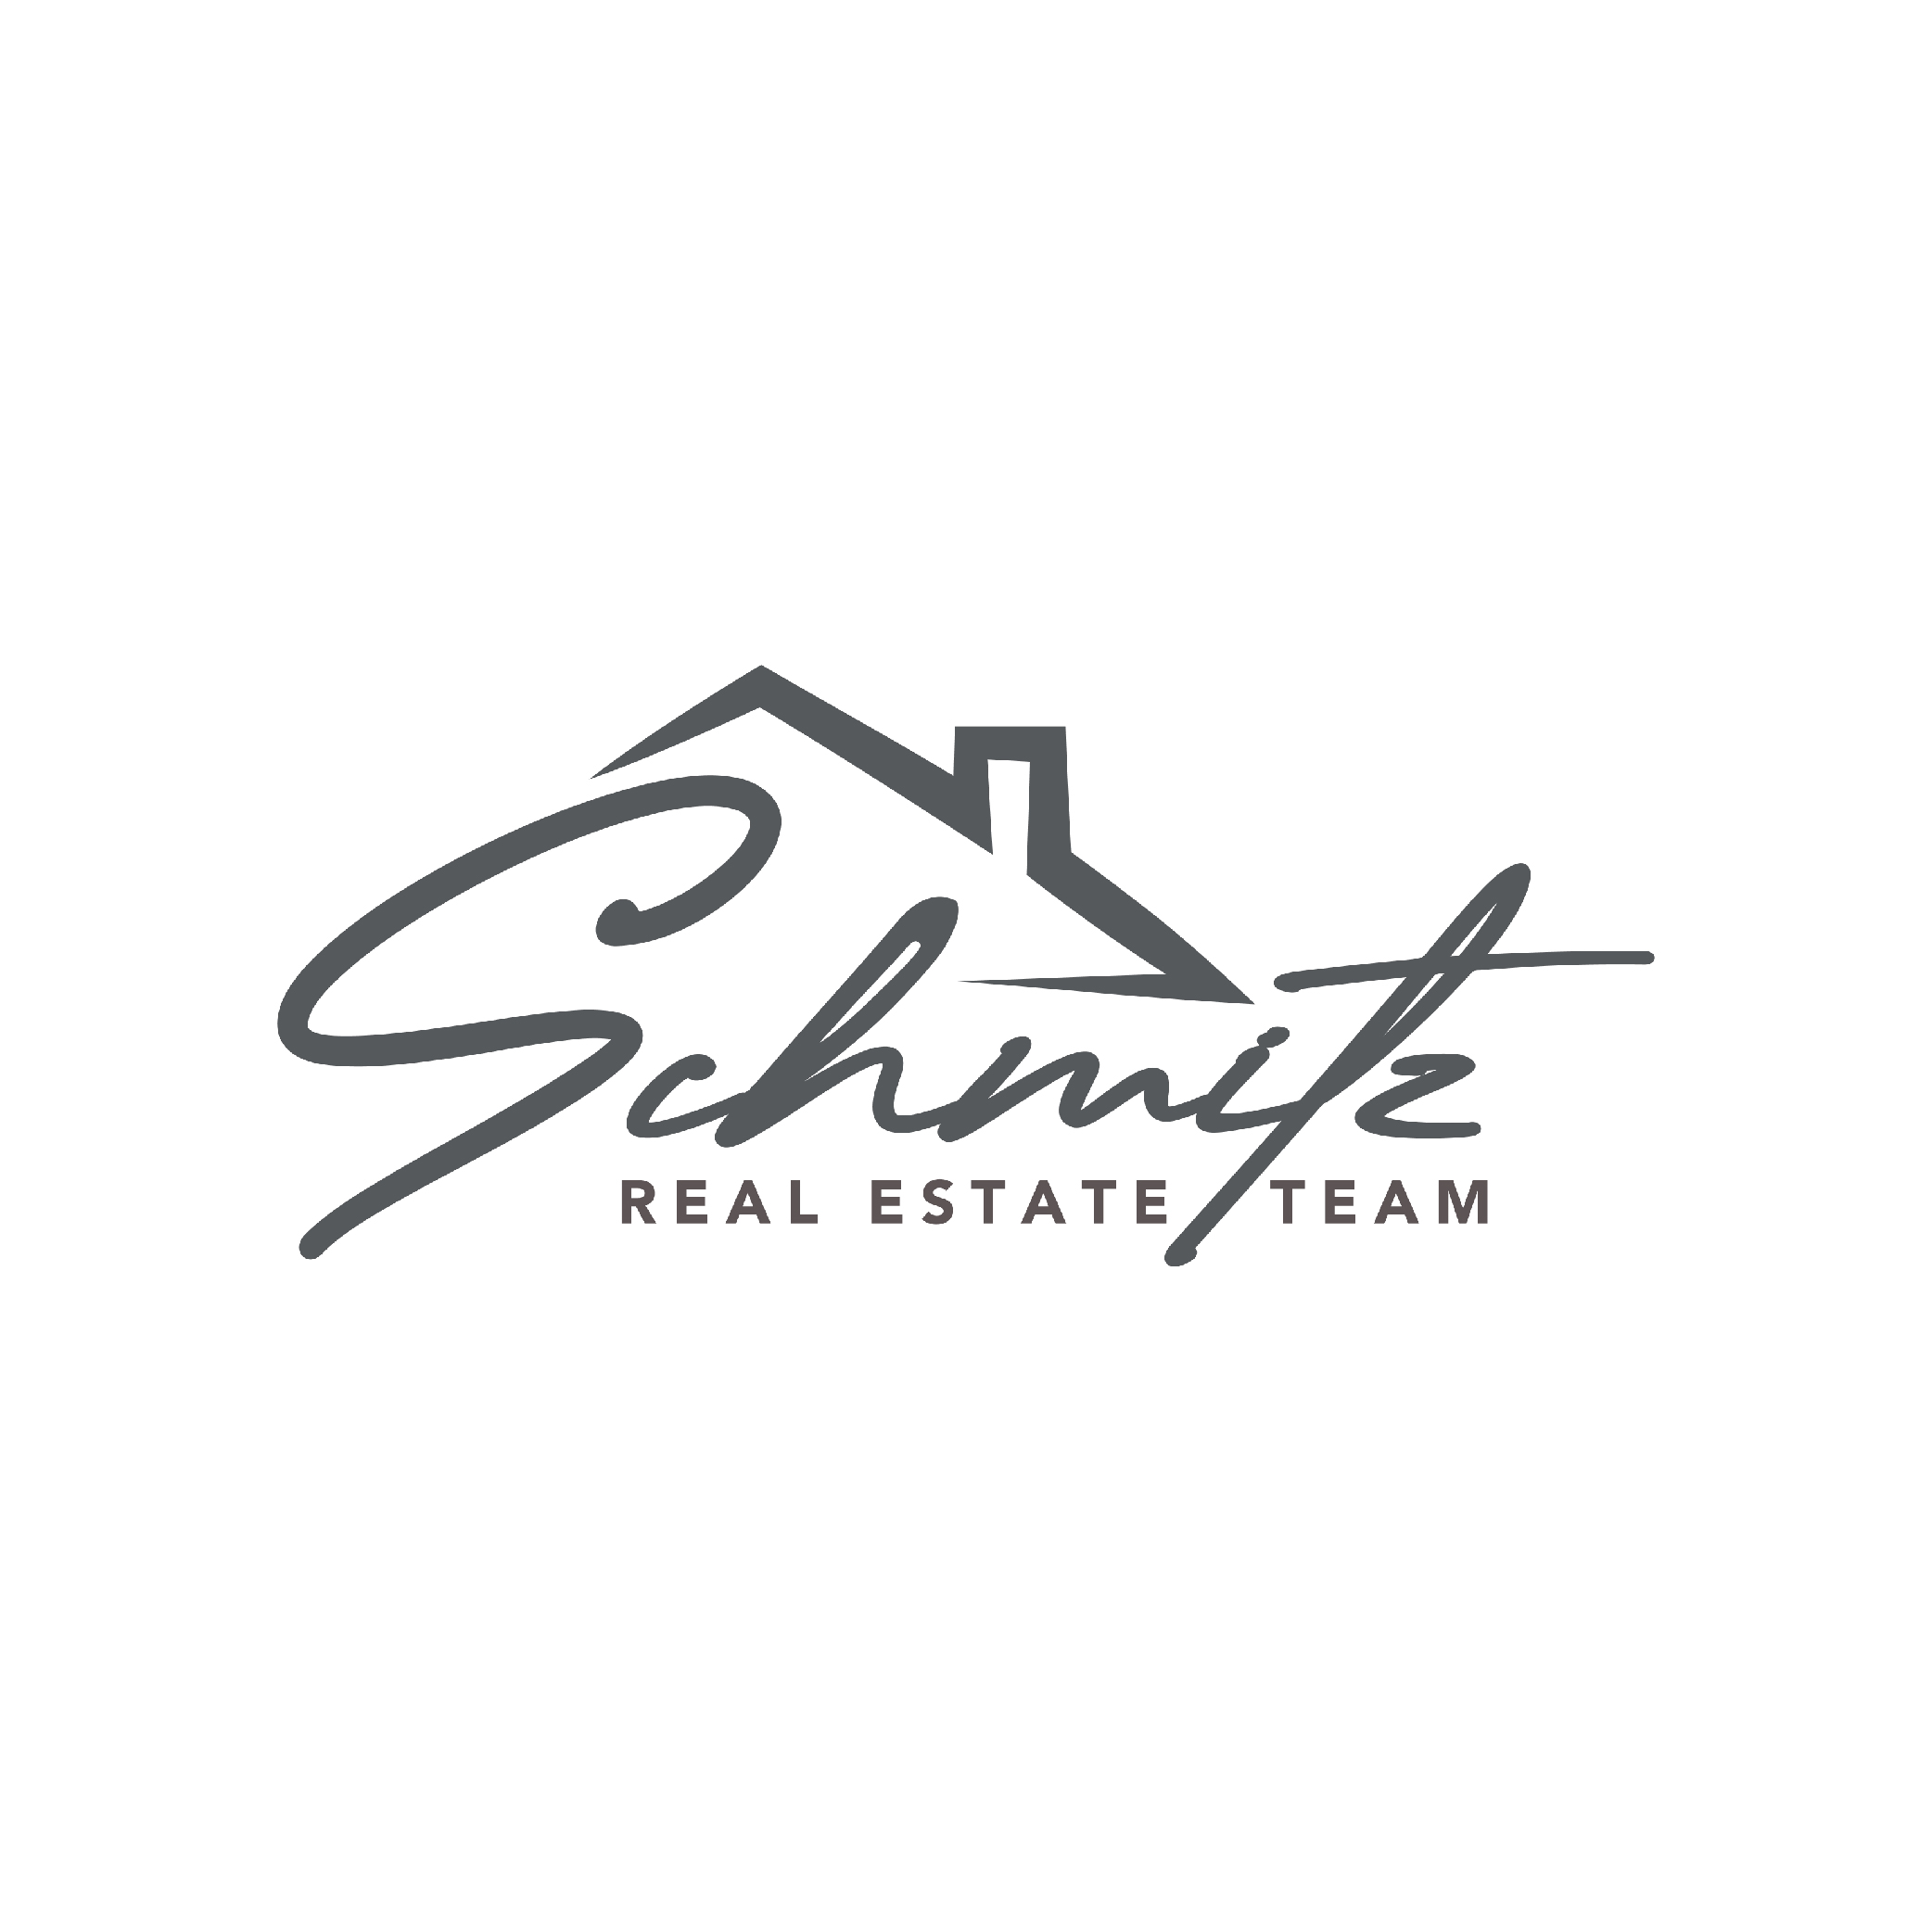 Schmitz Real Estate Team